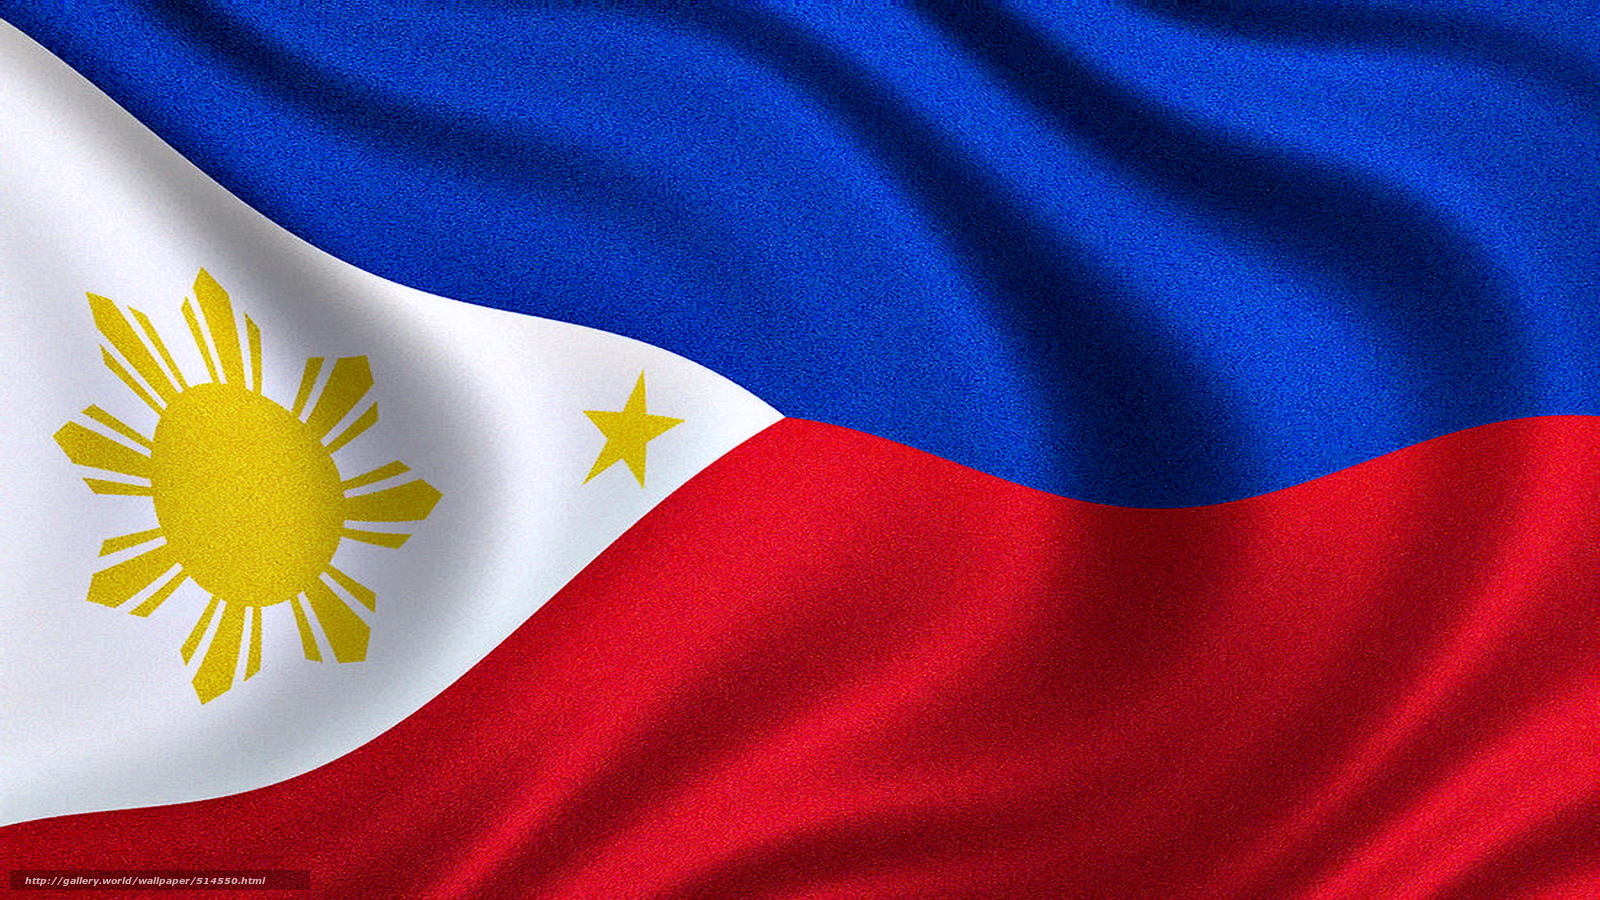 Philippines Flag Of Desktop Wallpaper In The